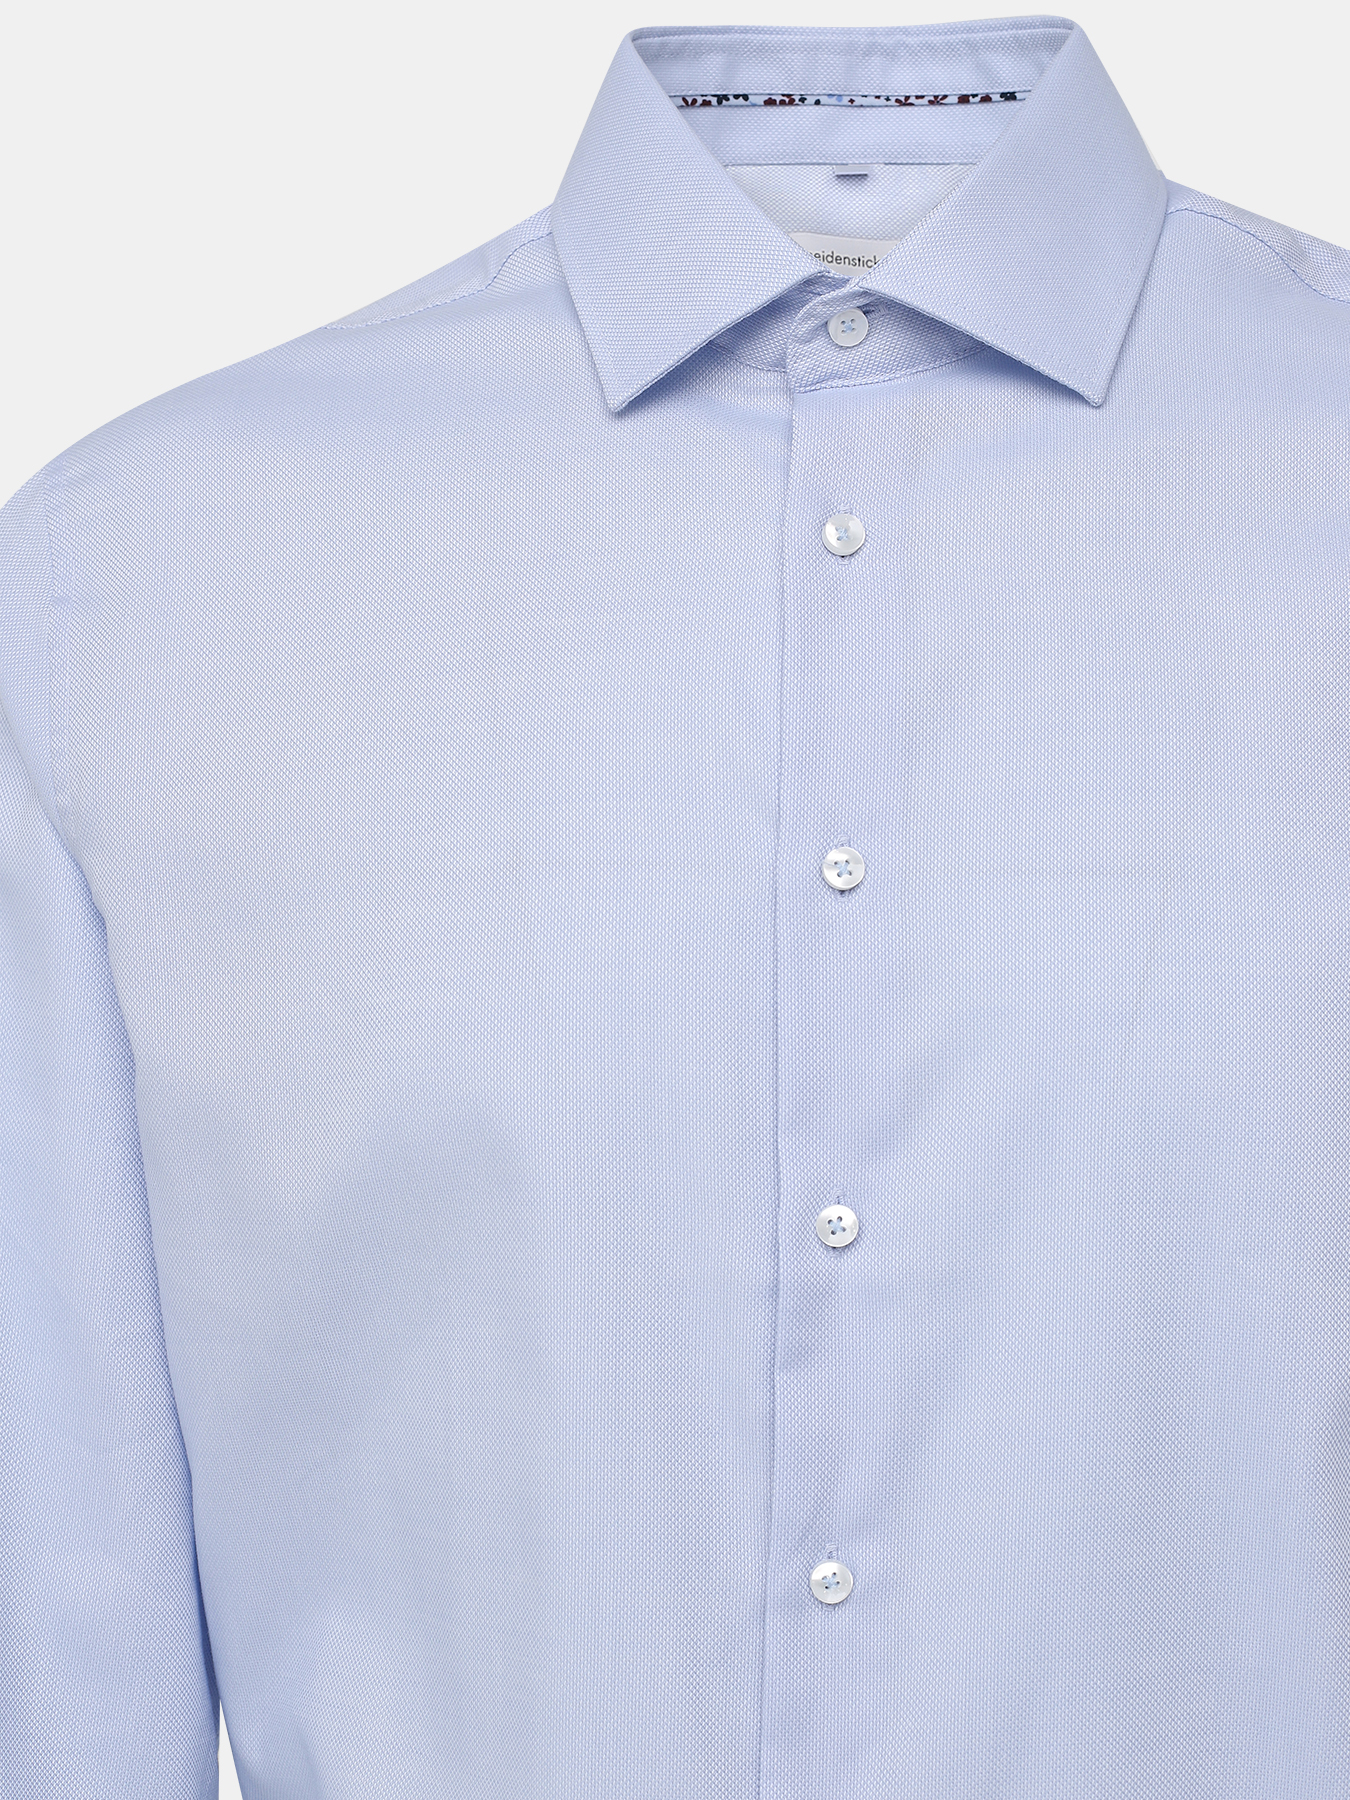 Рубашка Seidensticker 389117-052, цвет голубой, размер 60 - фото 3